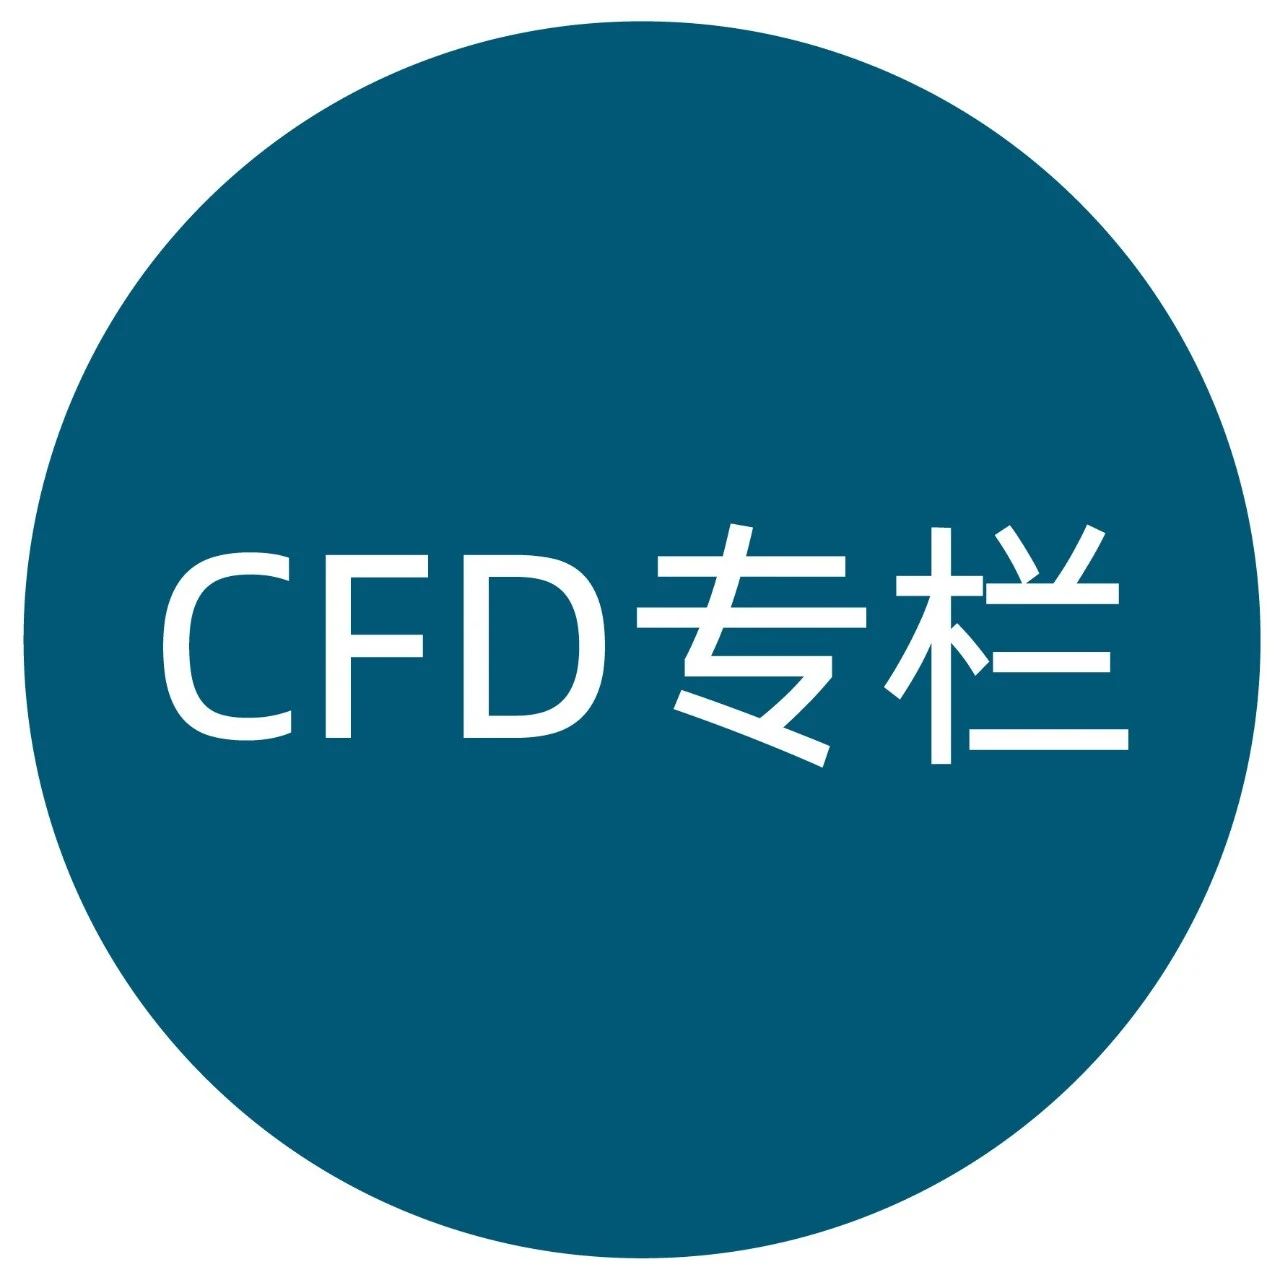 CFD专栏丨乘员舱热管理解决方案